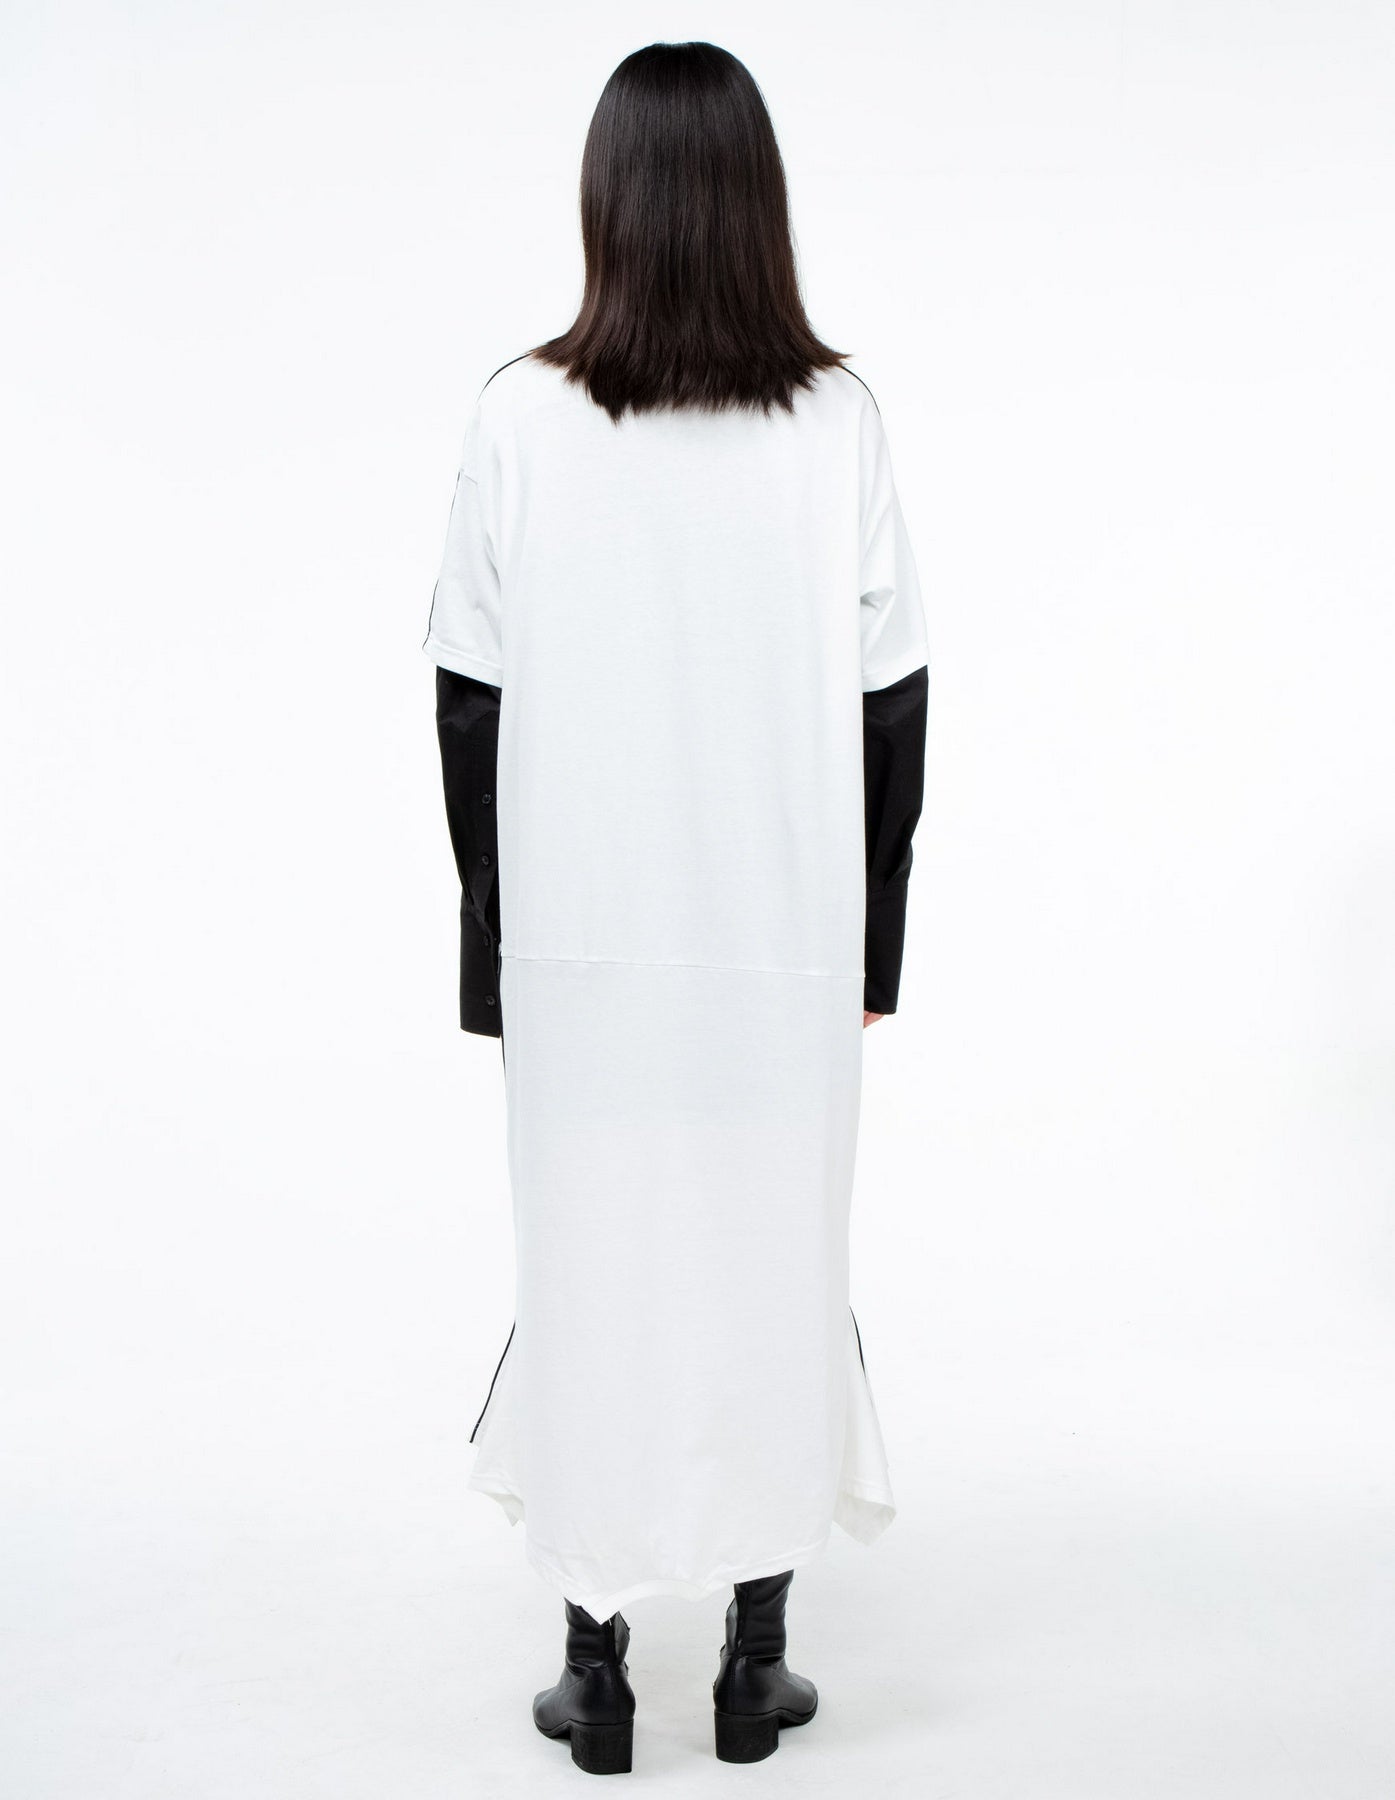 Chungnam Nothing Inside Off White Dress